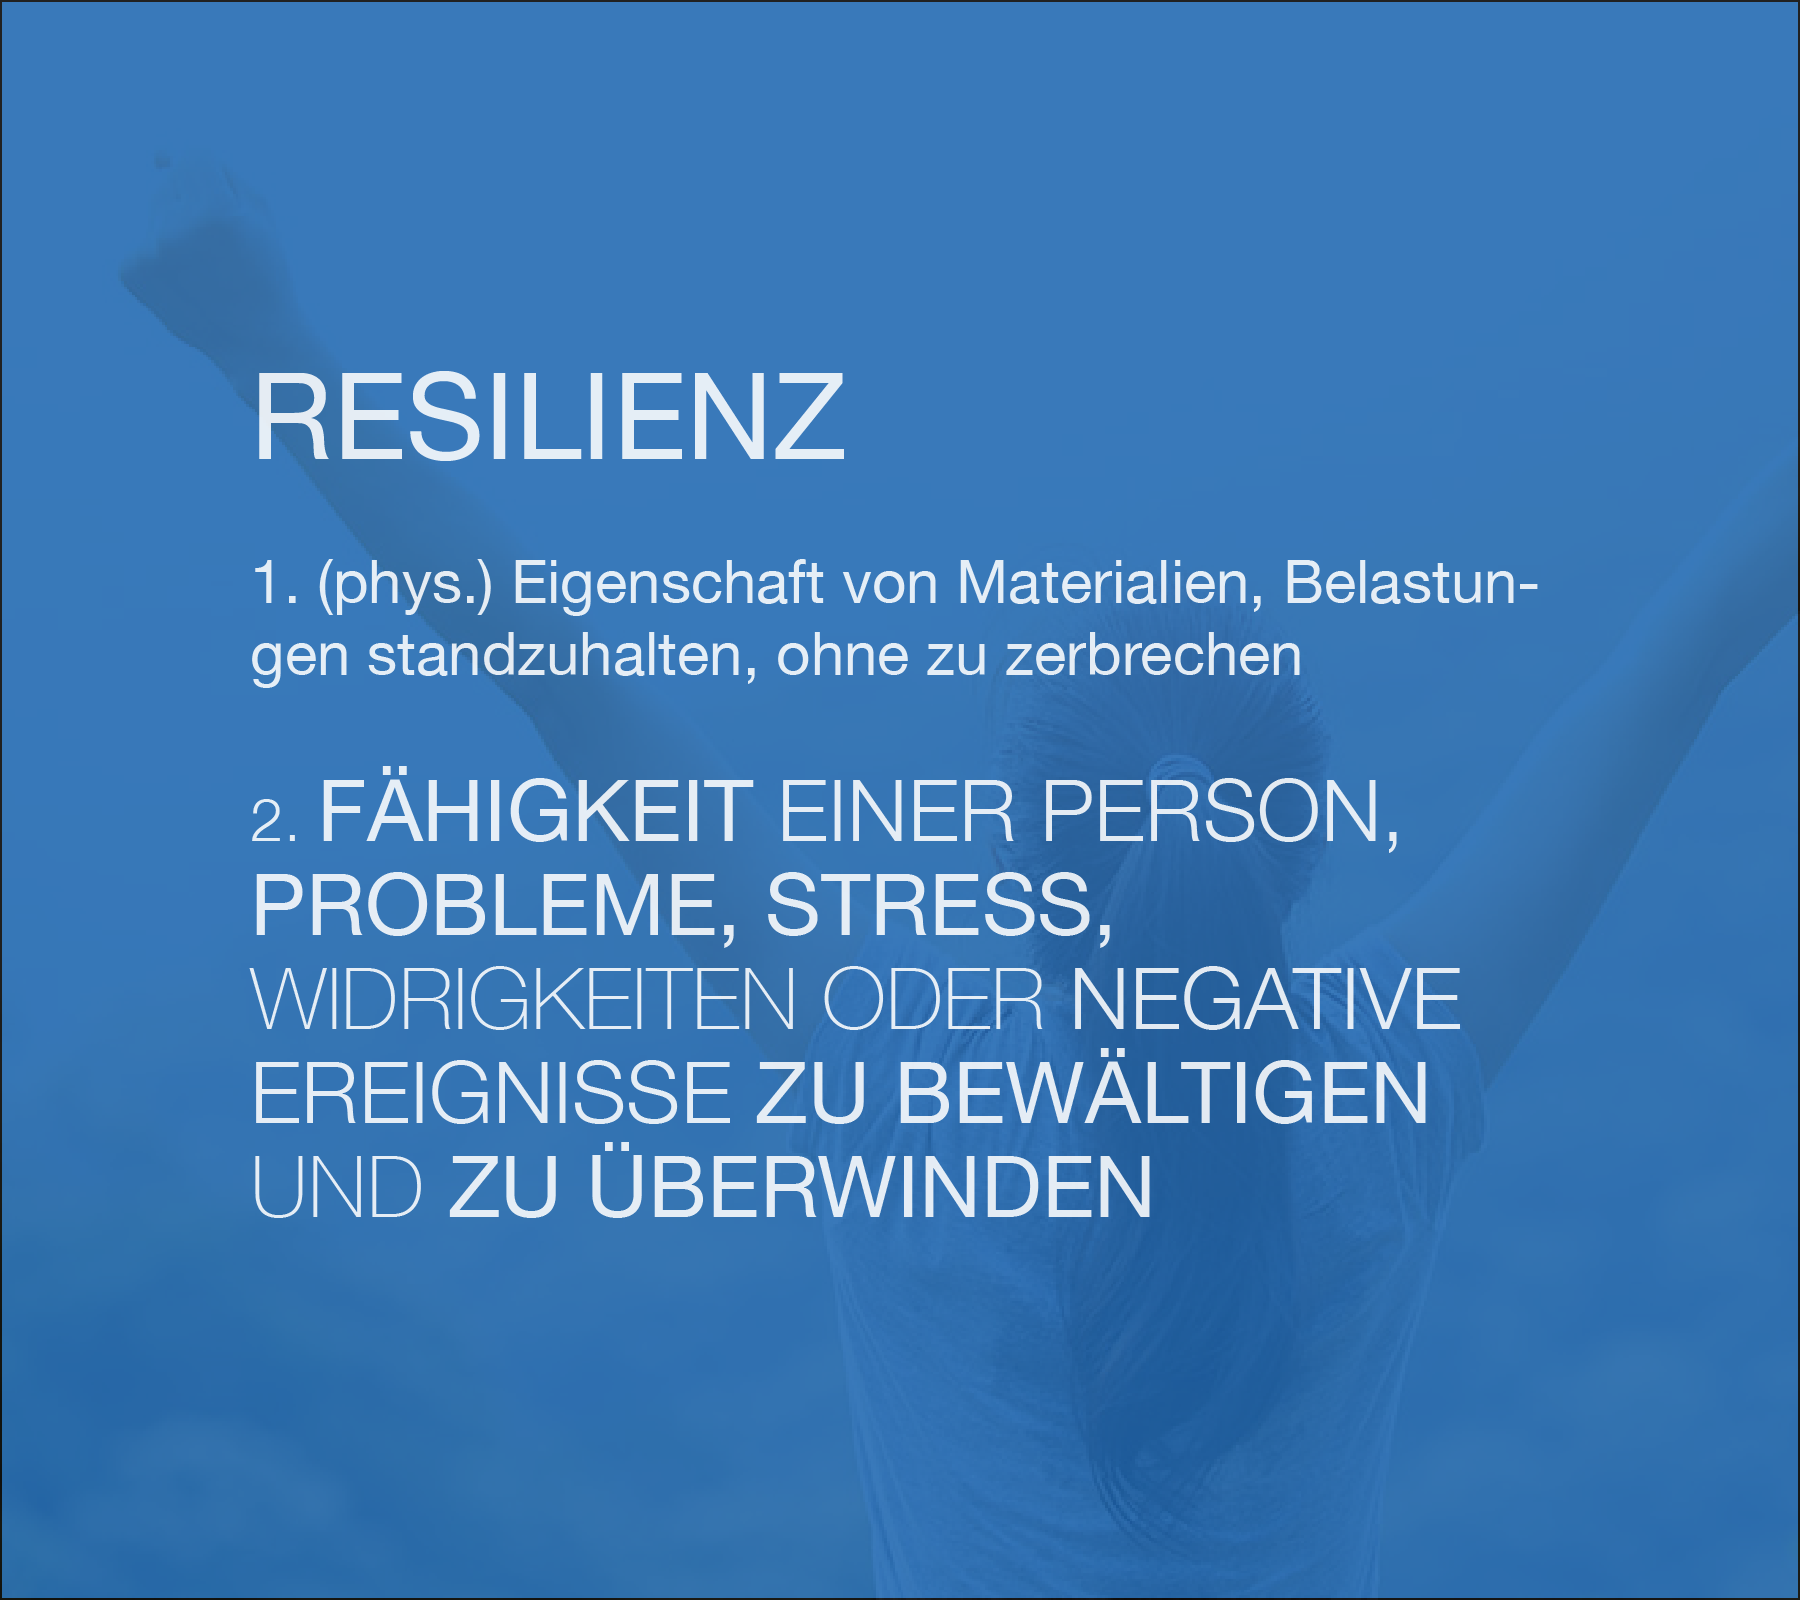 Resilienz Definition